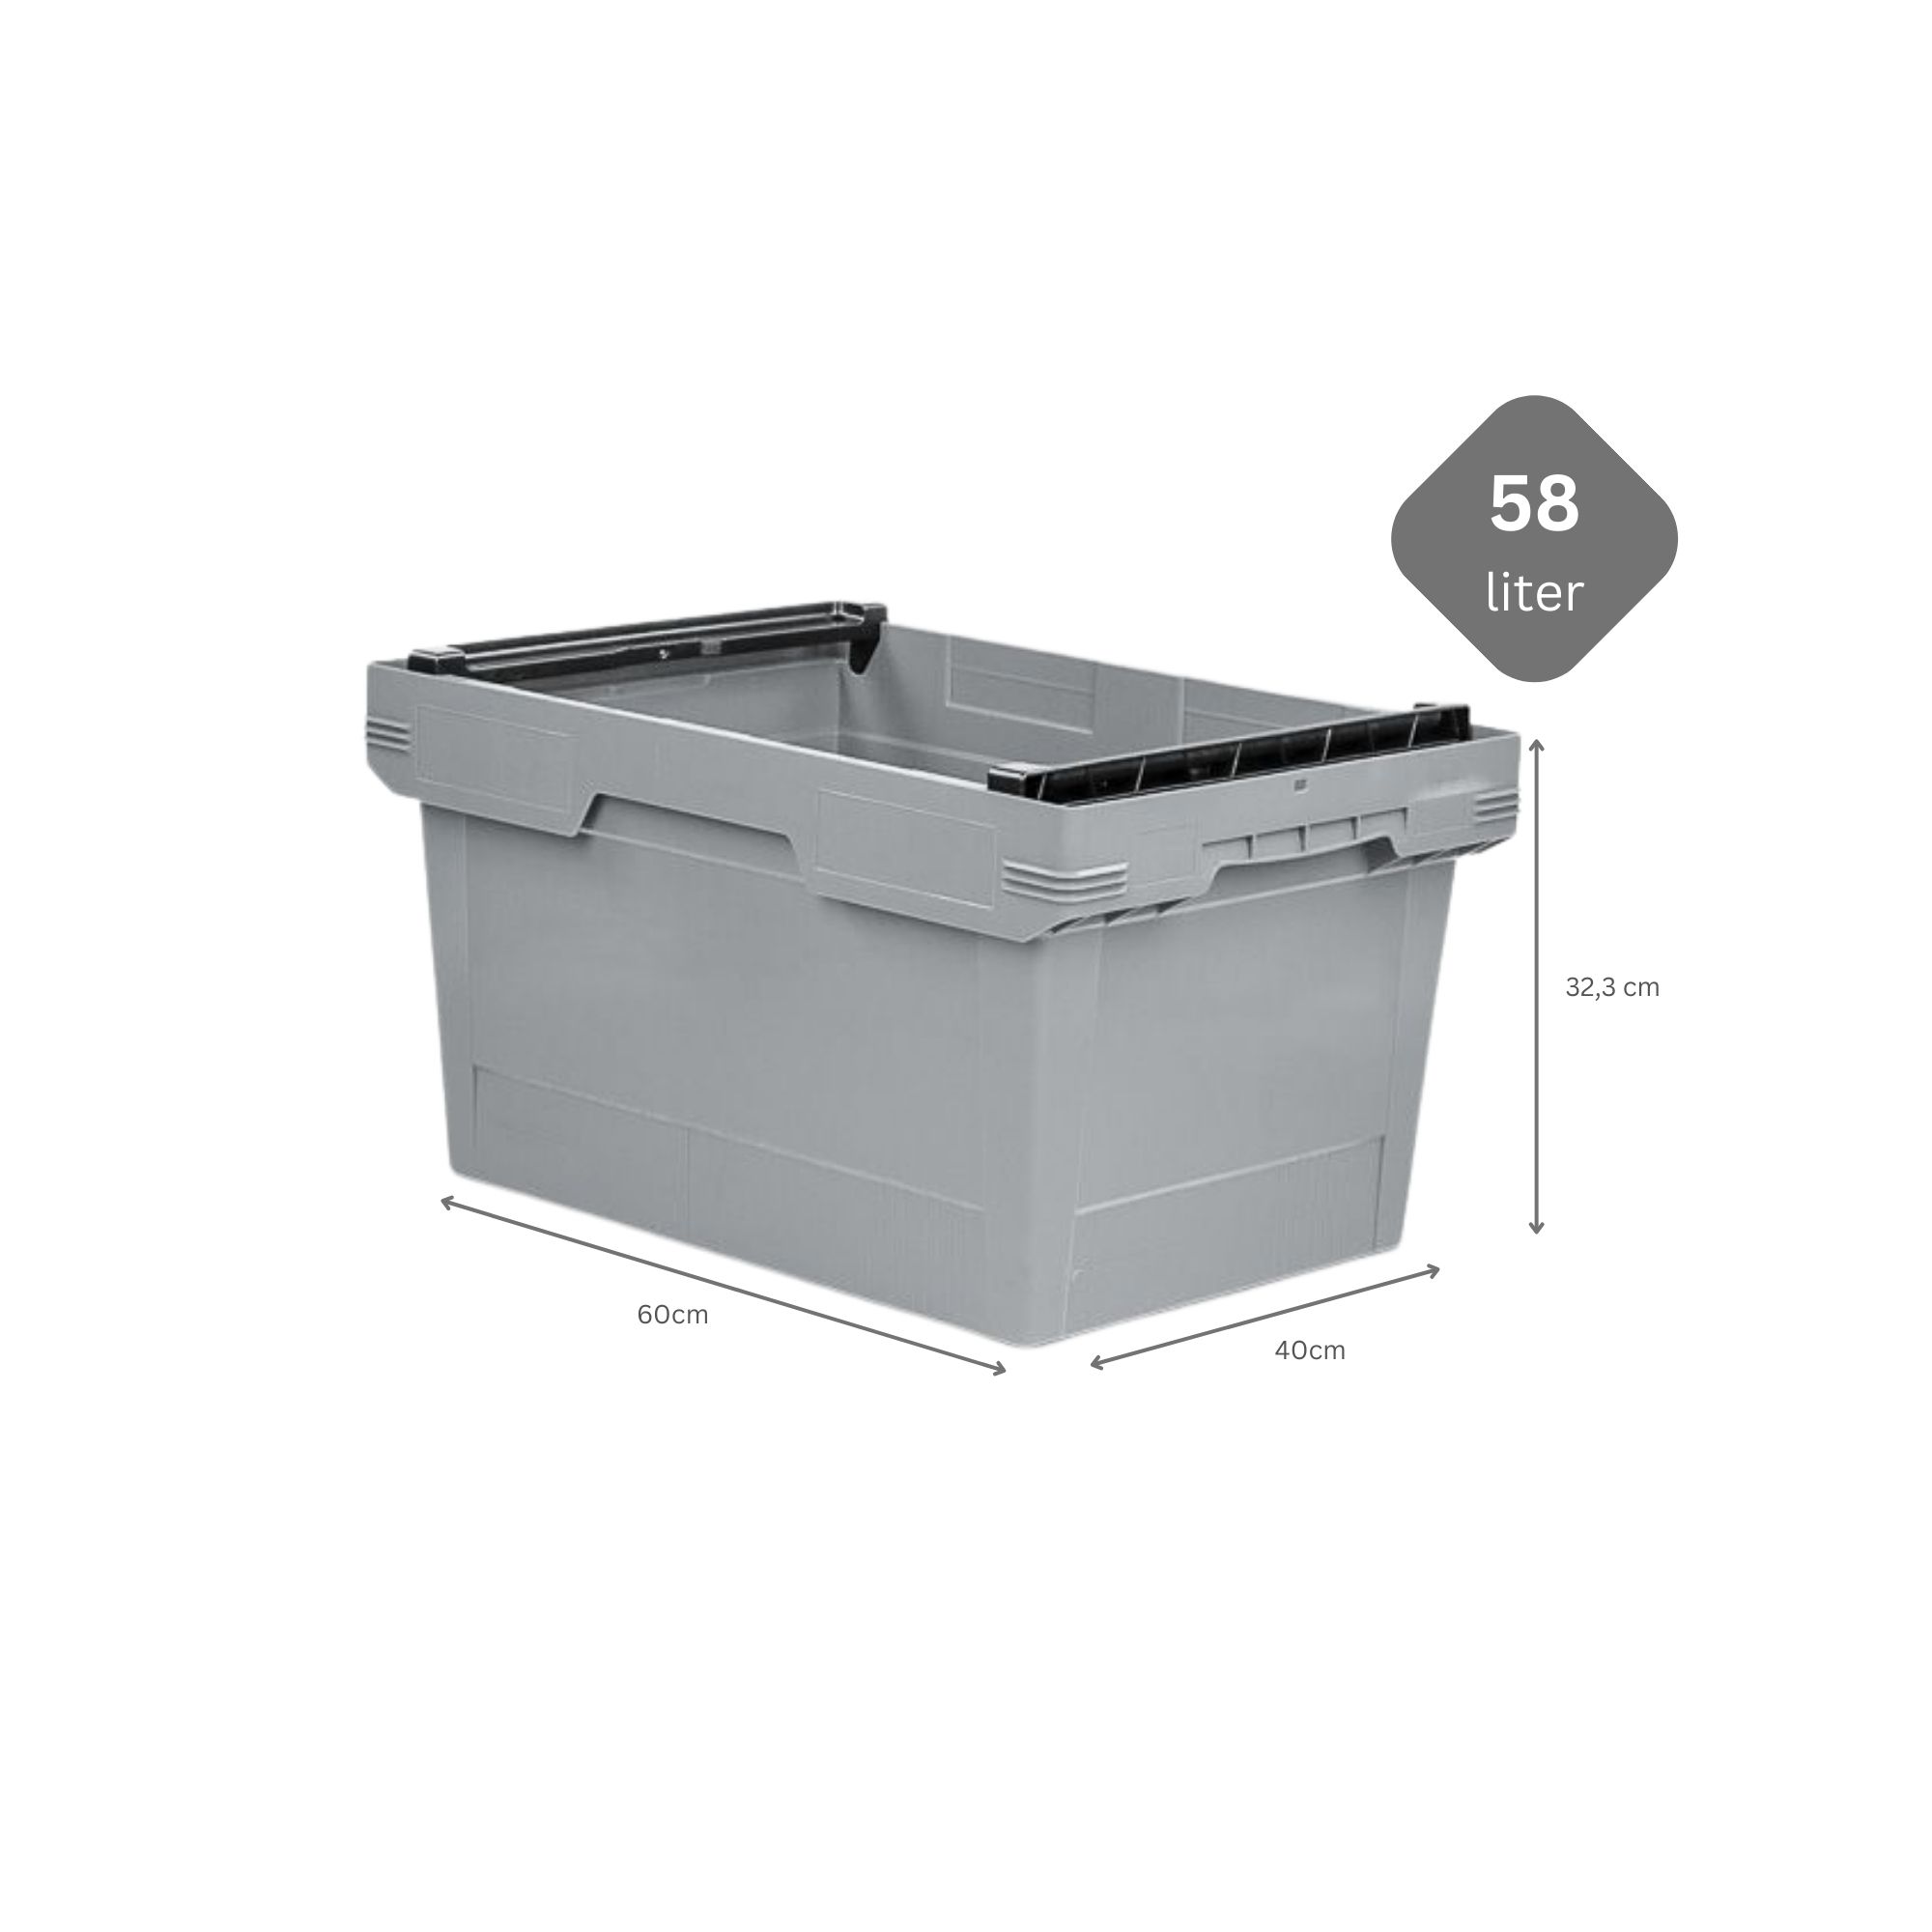 Conical Mehrweg-Stapelbehälter mit Stapelbügel Grau | HxBxT 32,3x40x60cm | 58 Liter | Lagerbox Eurobox Transportbox Transportbehälter Stapelbehälter